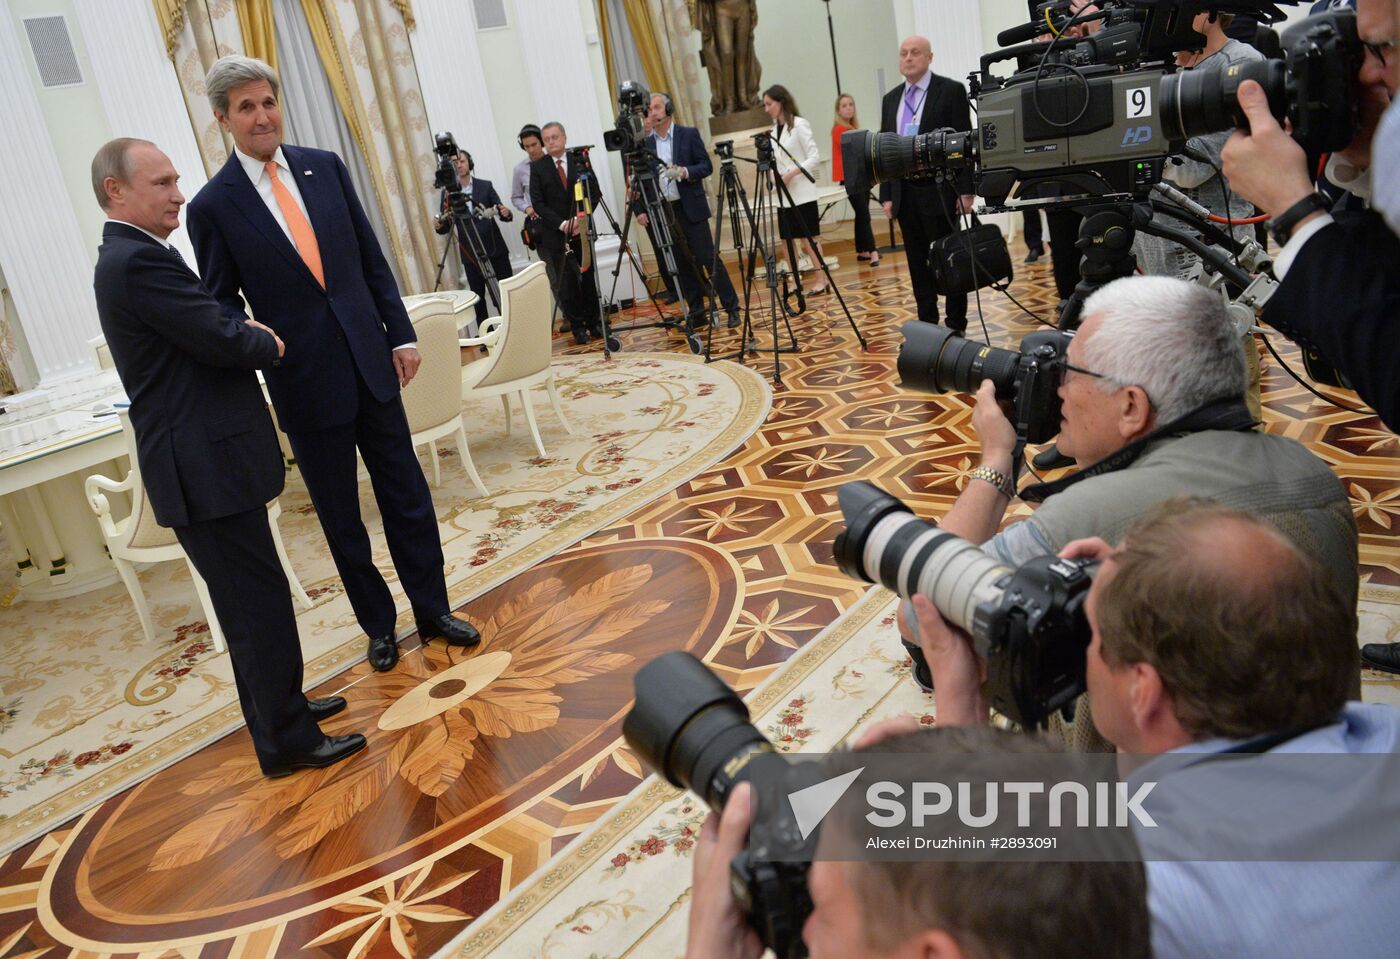 President Putin meets with US Secretary of State John Kerry